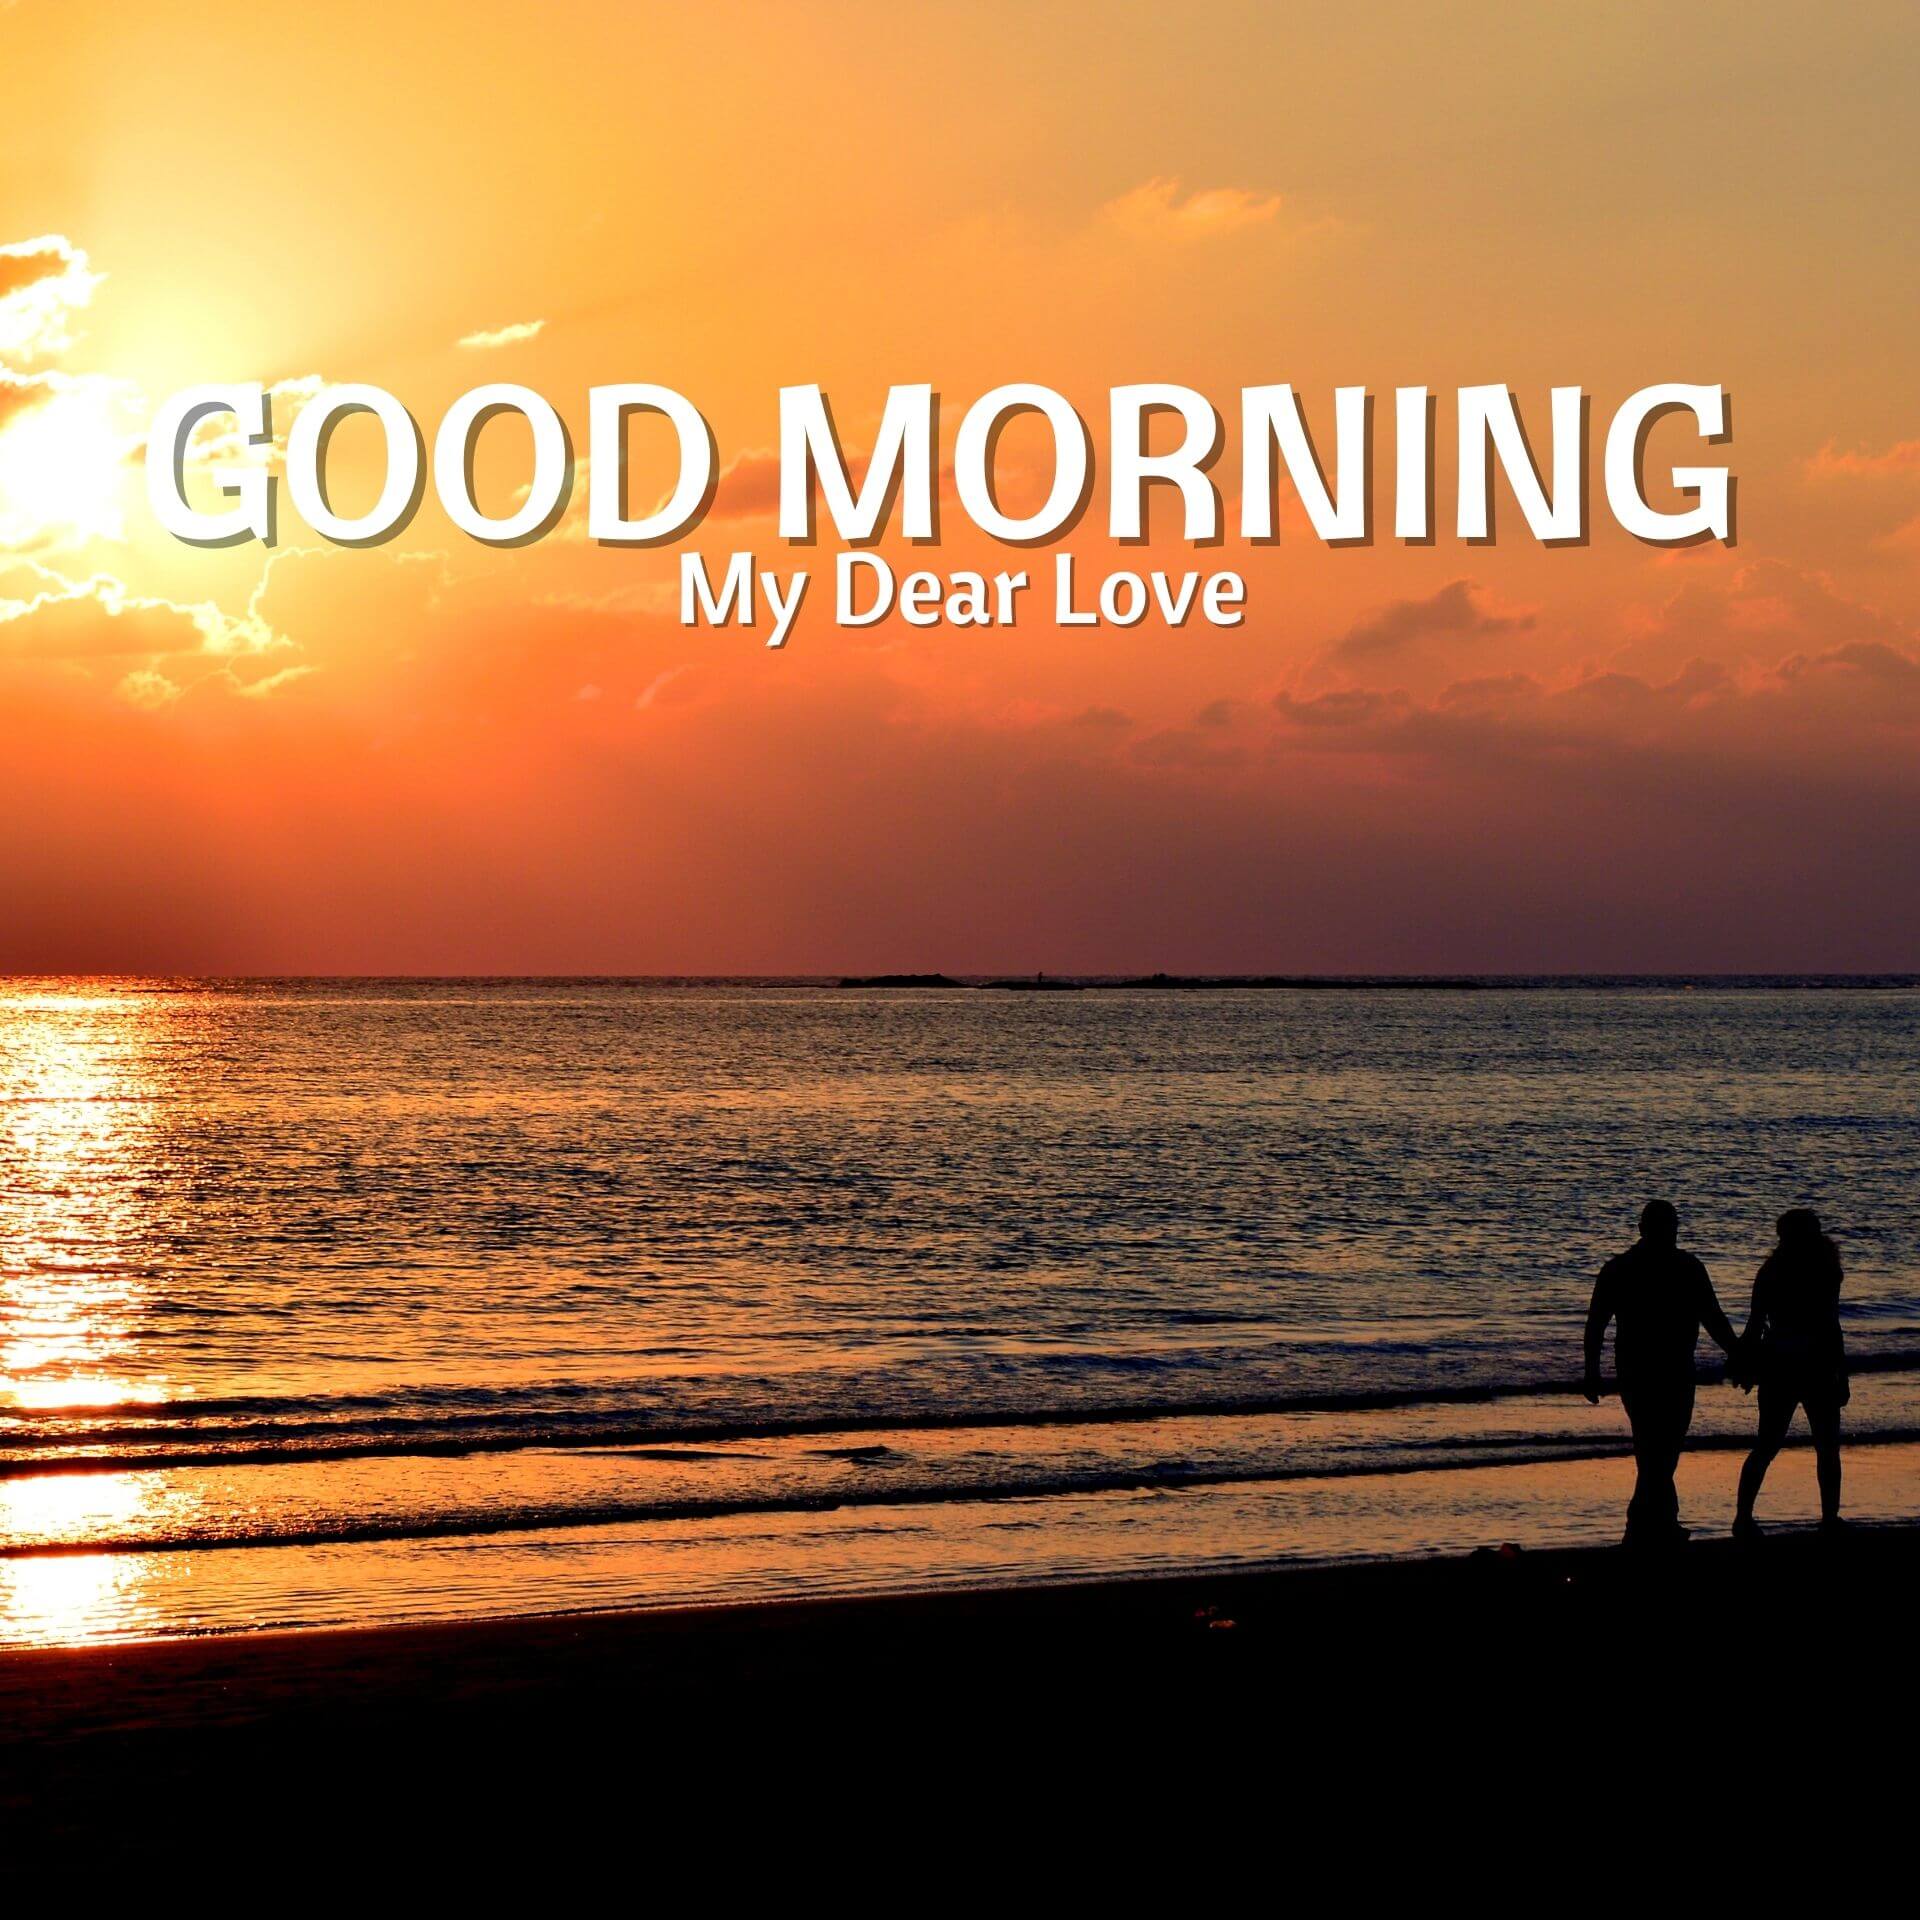 Romantic Good Morning Pics Wallpaper With Sunrise